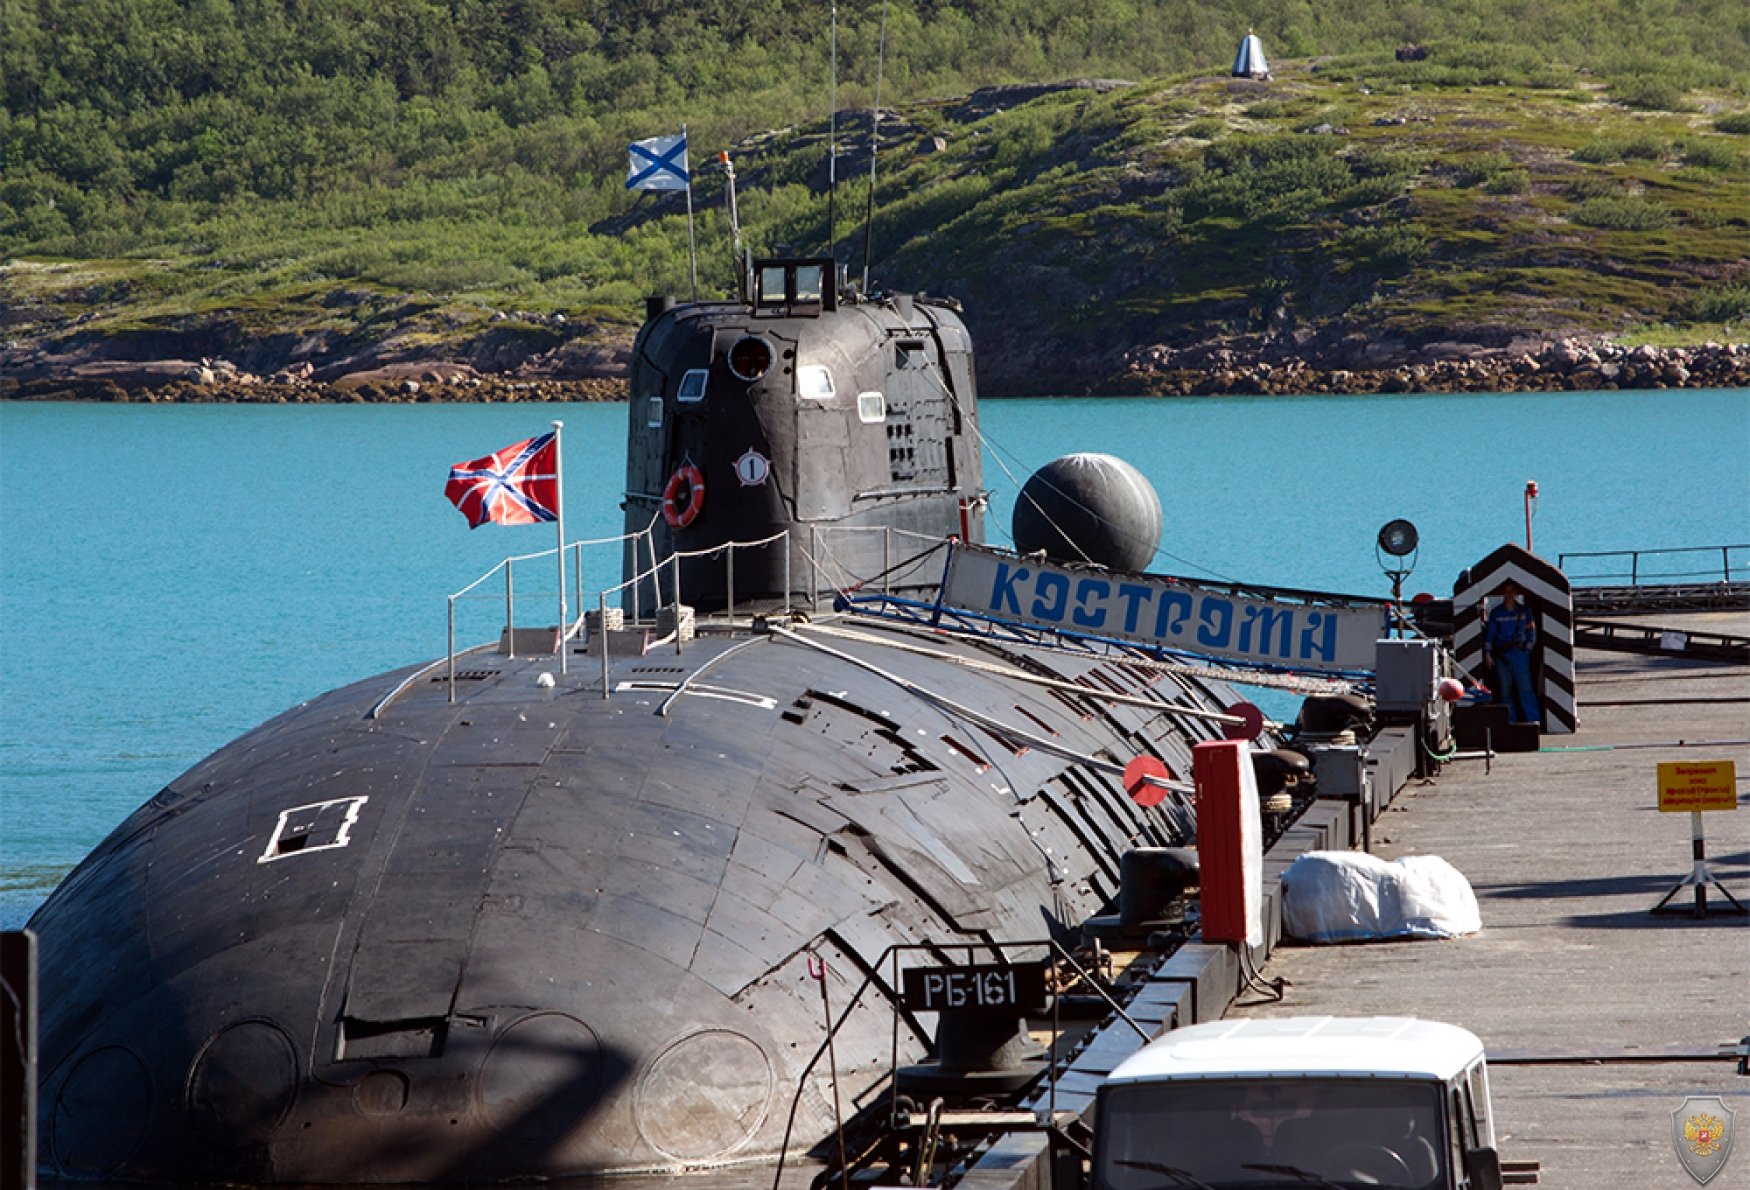 Пл ка. Атомная подводная лодка «Кострома» проекта 945 «Барракуда». БАПЛ Кострома 945 проект. Подводная лодка б-276 Кострома. Подводная лодка Барракуда проект 945.